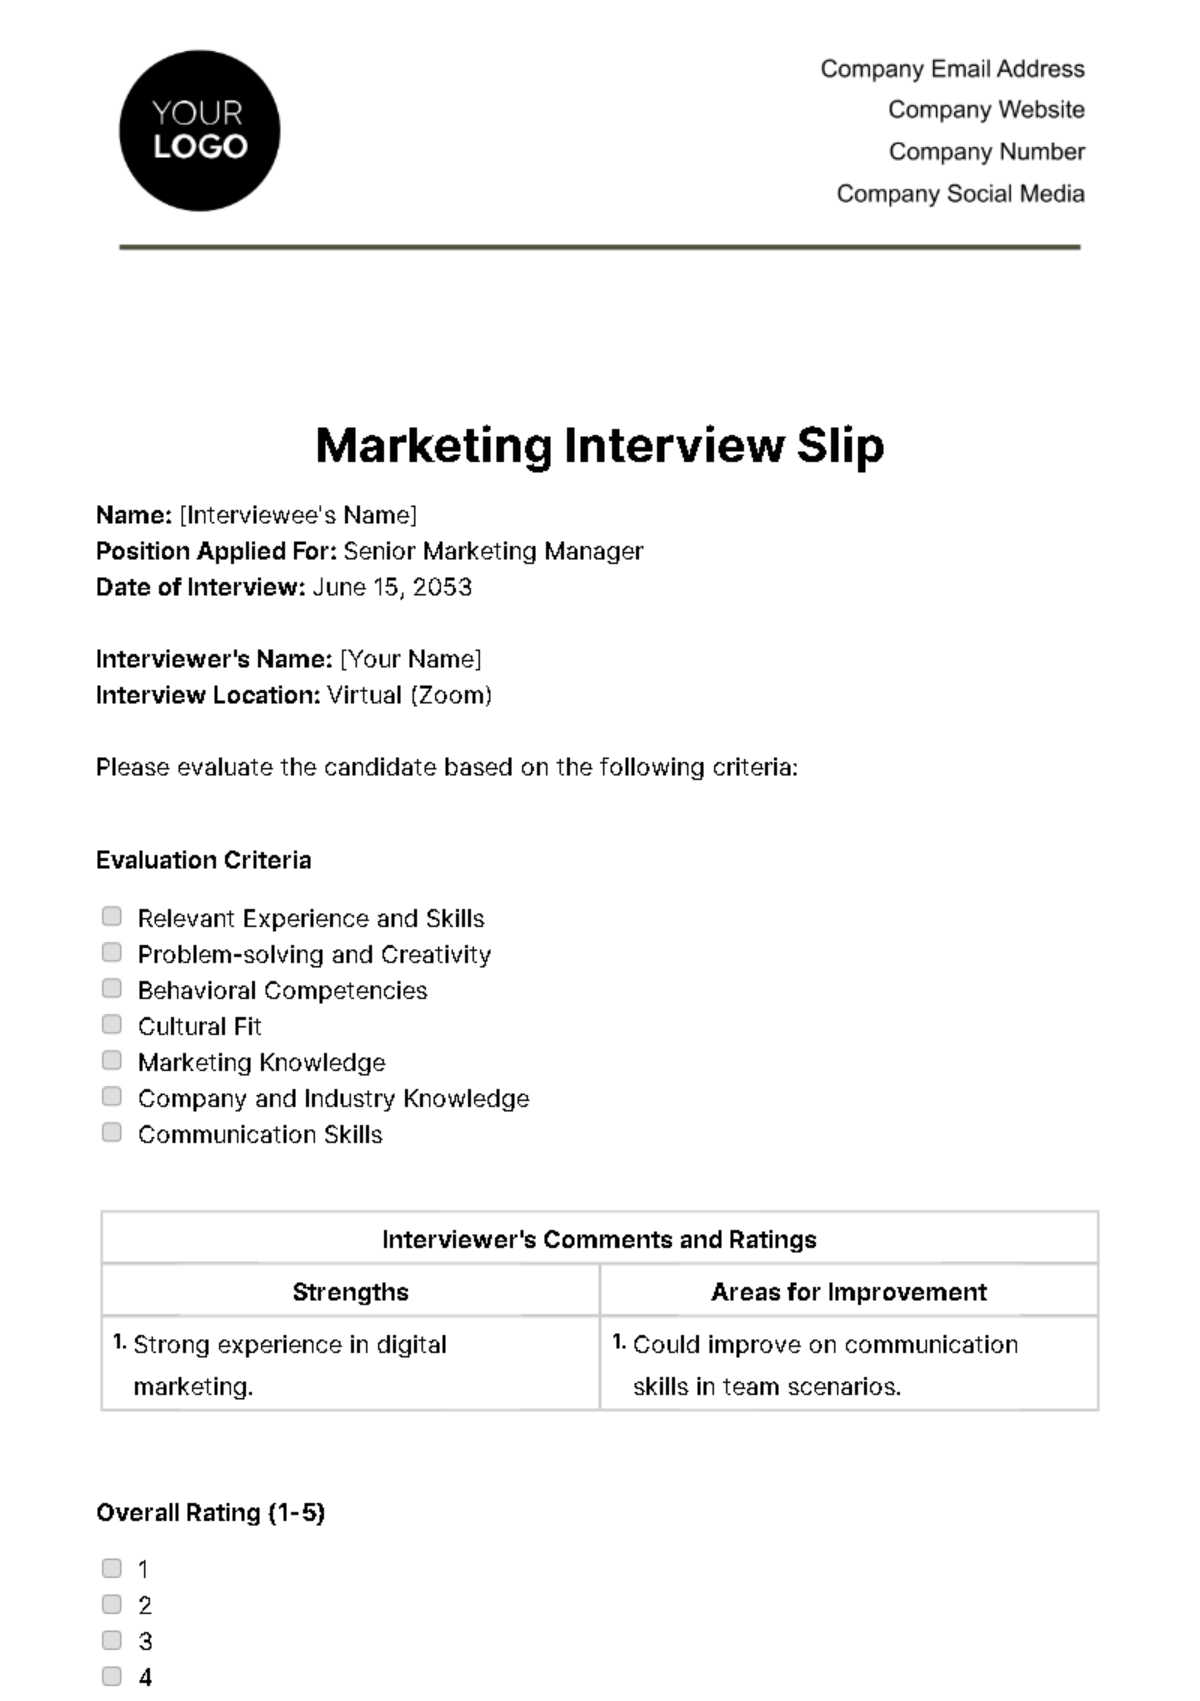 Marketing Interview Slip Template